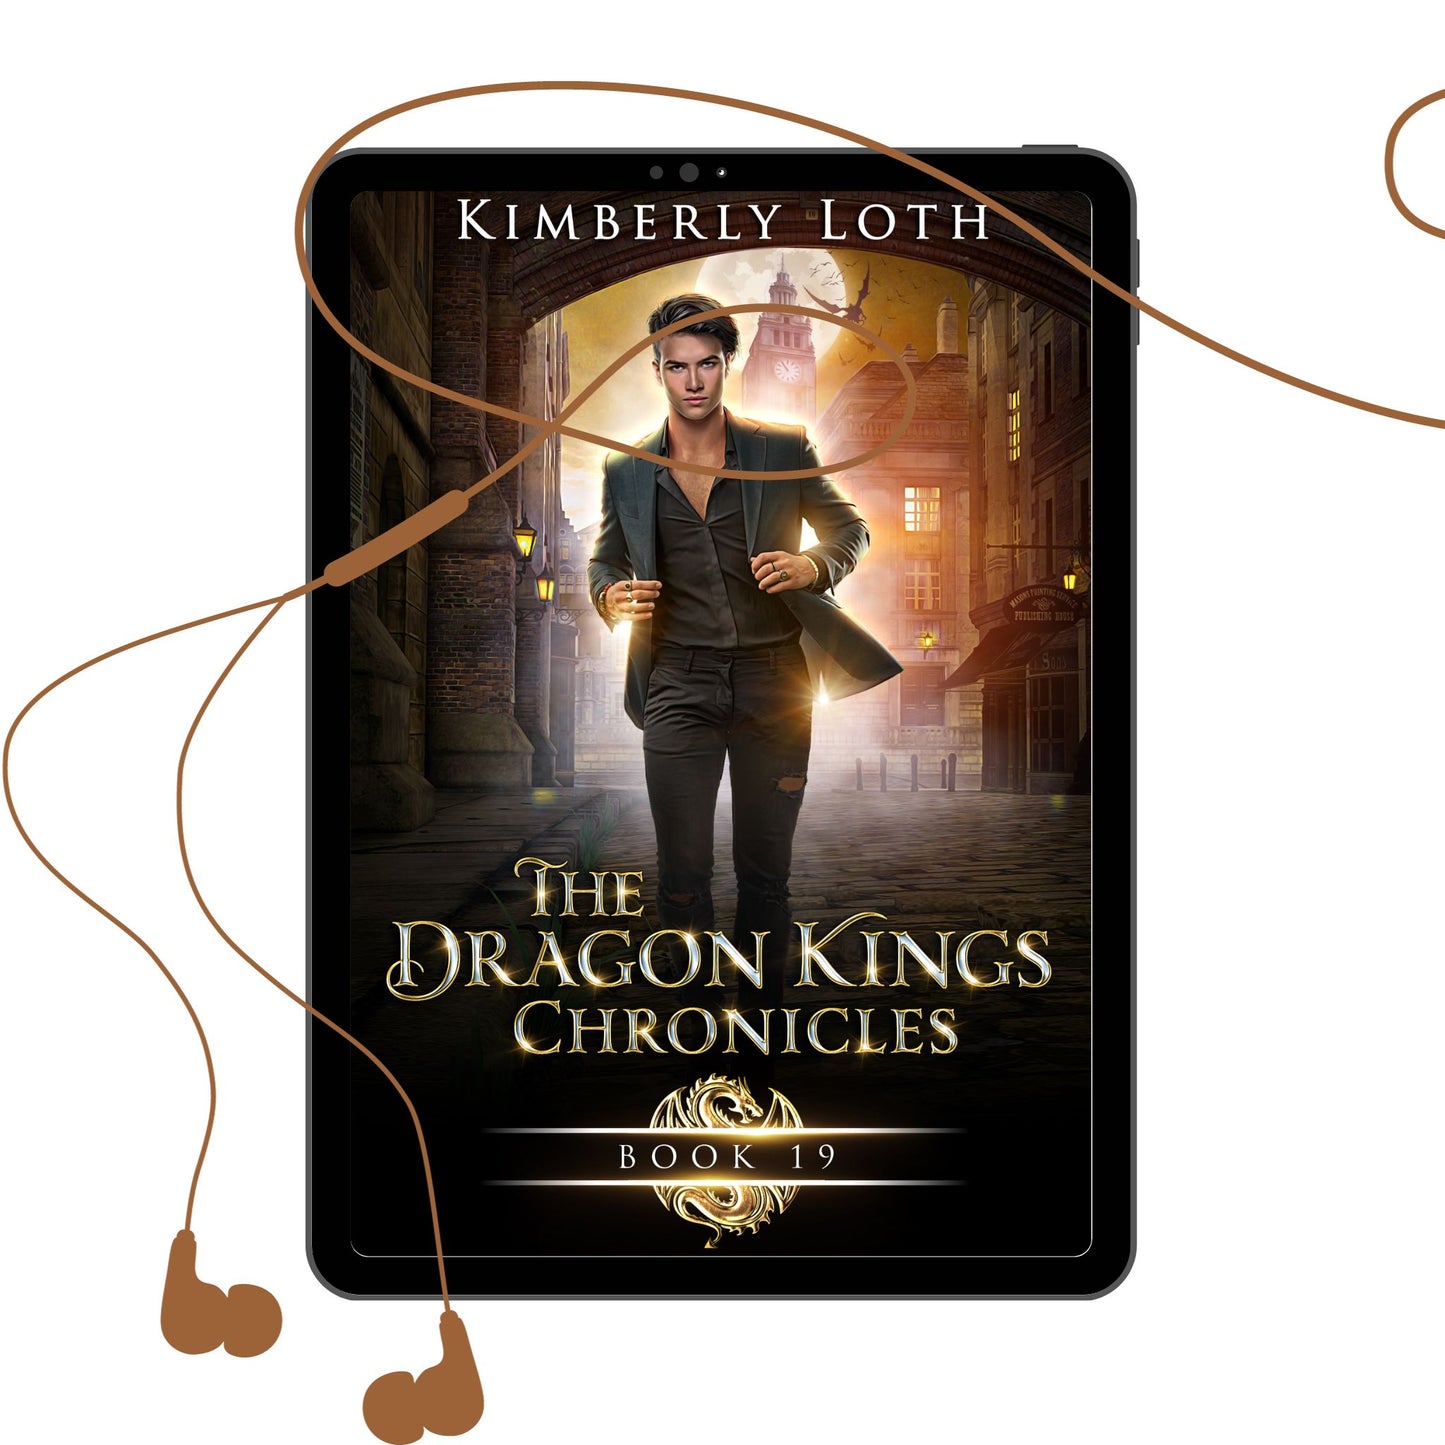 The Dragon Kings Book Twenty-Four